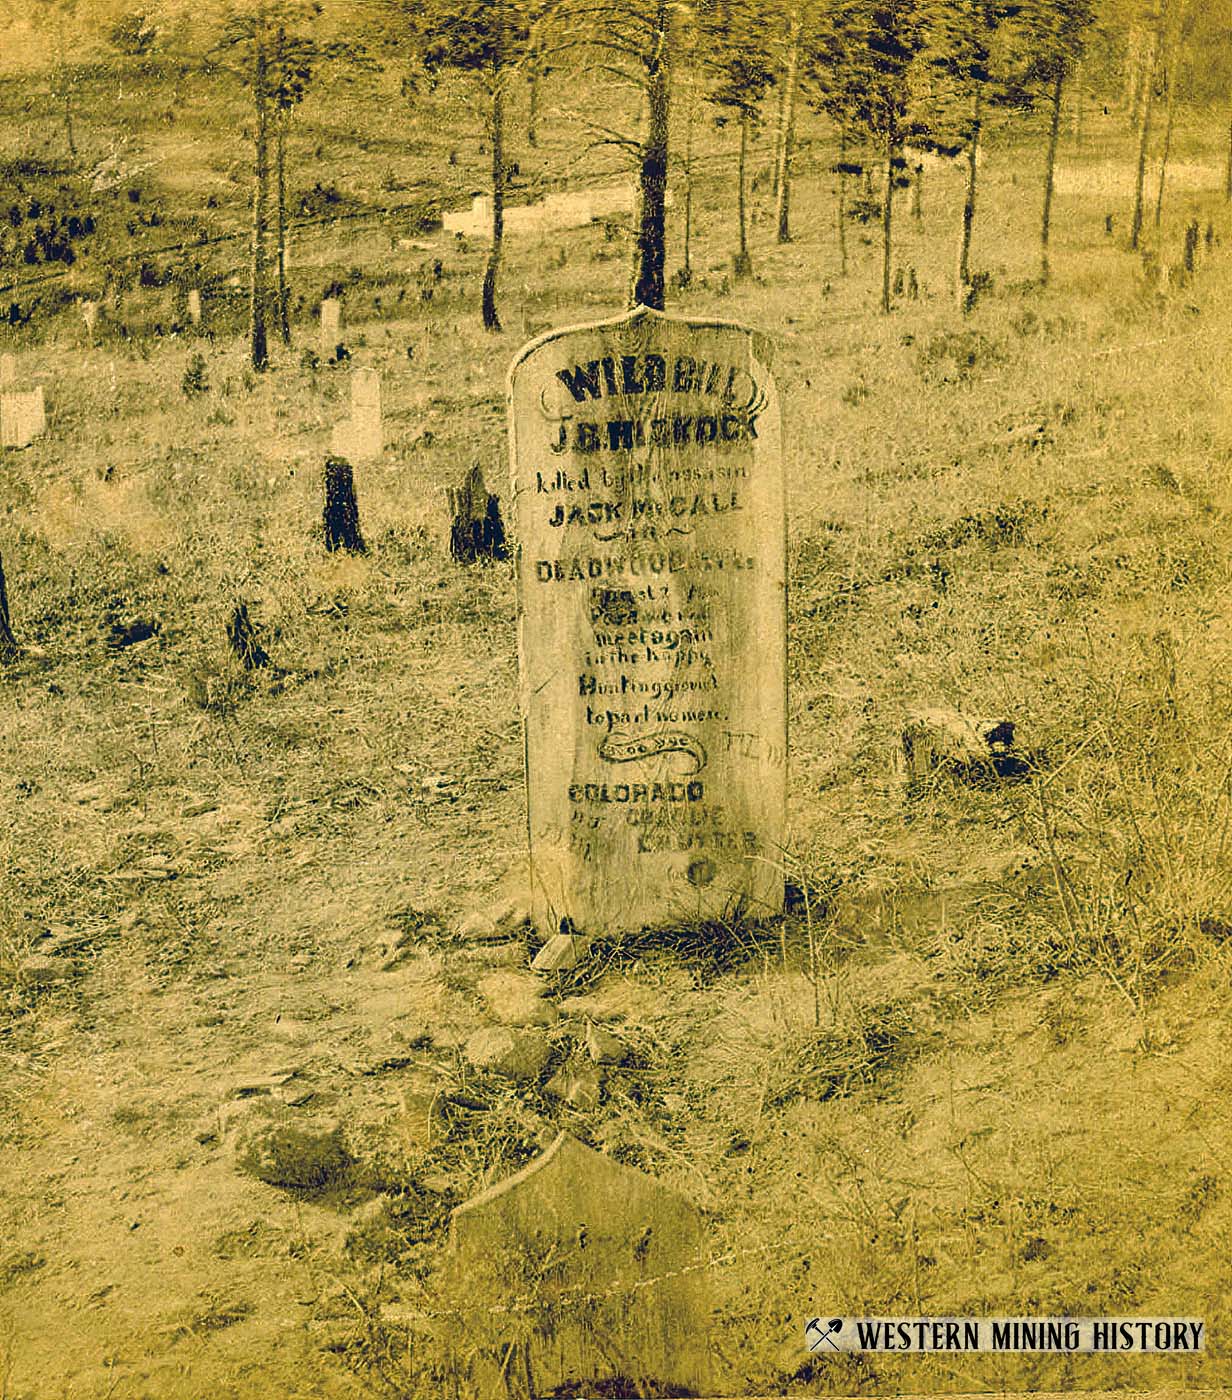 Grave of Wild Bill Hickock at Deadwood 1876